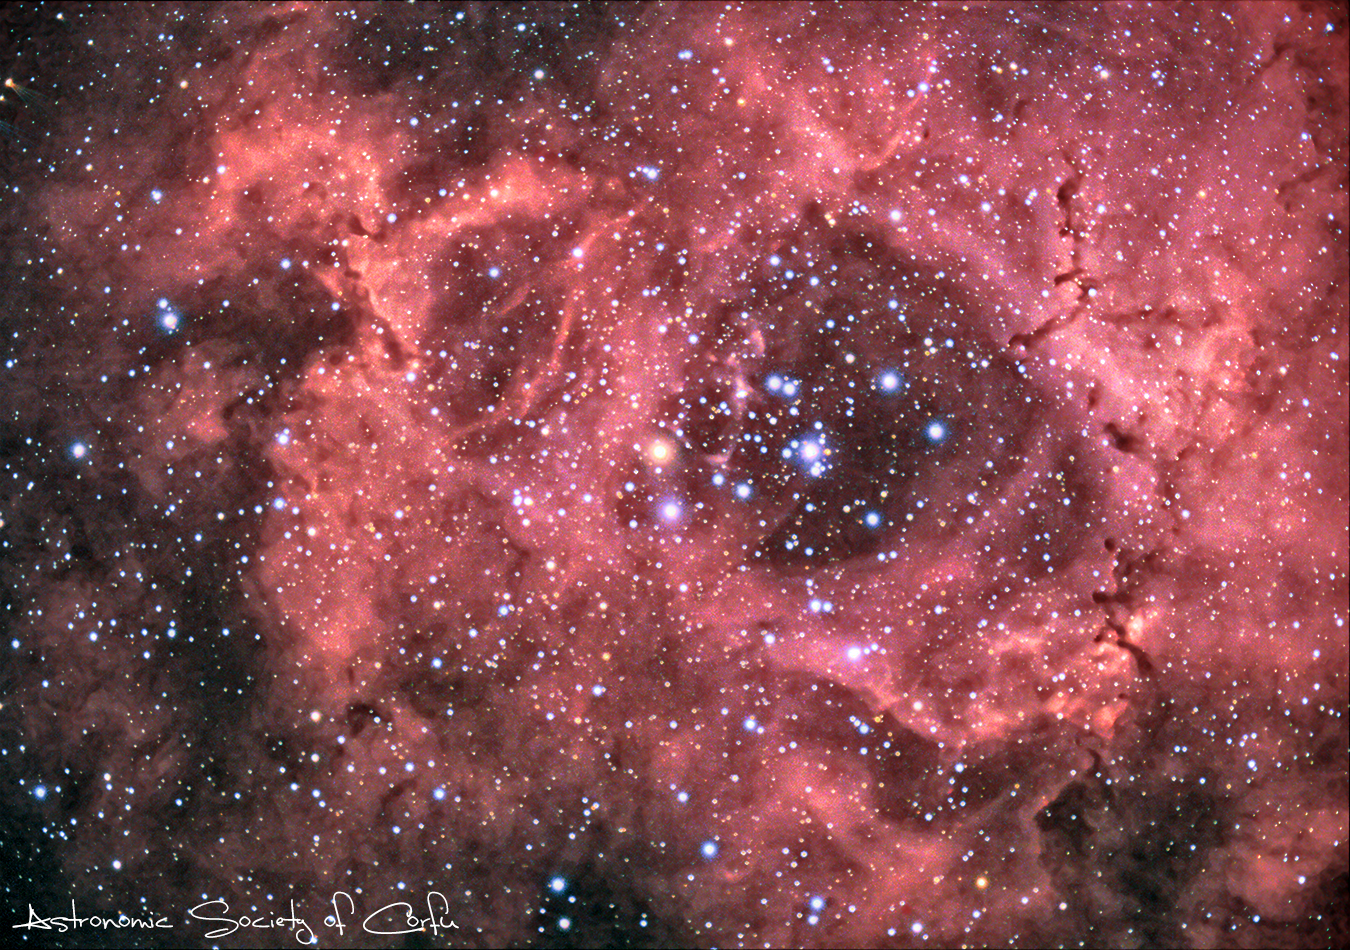 The Rosette Nebula - Caldwell 49